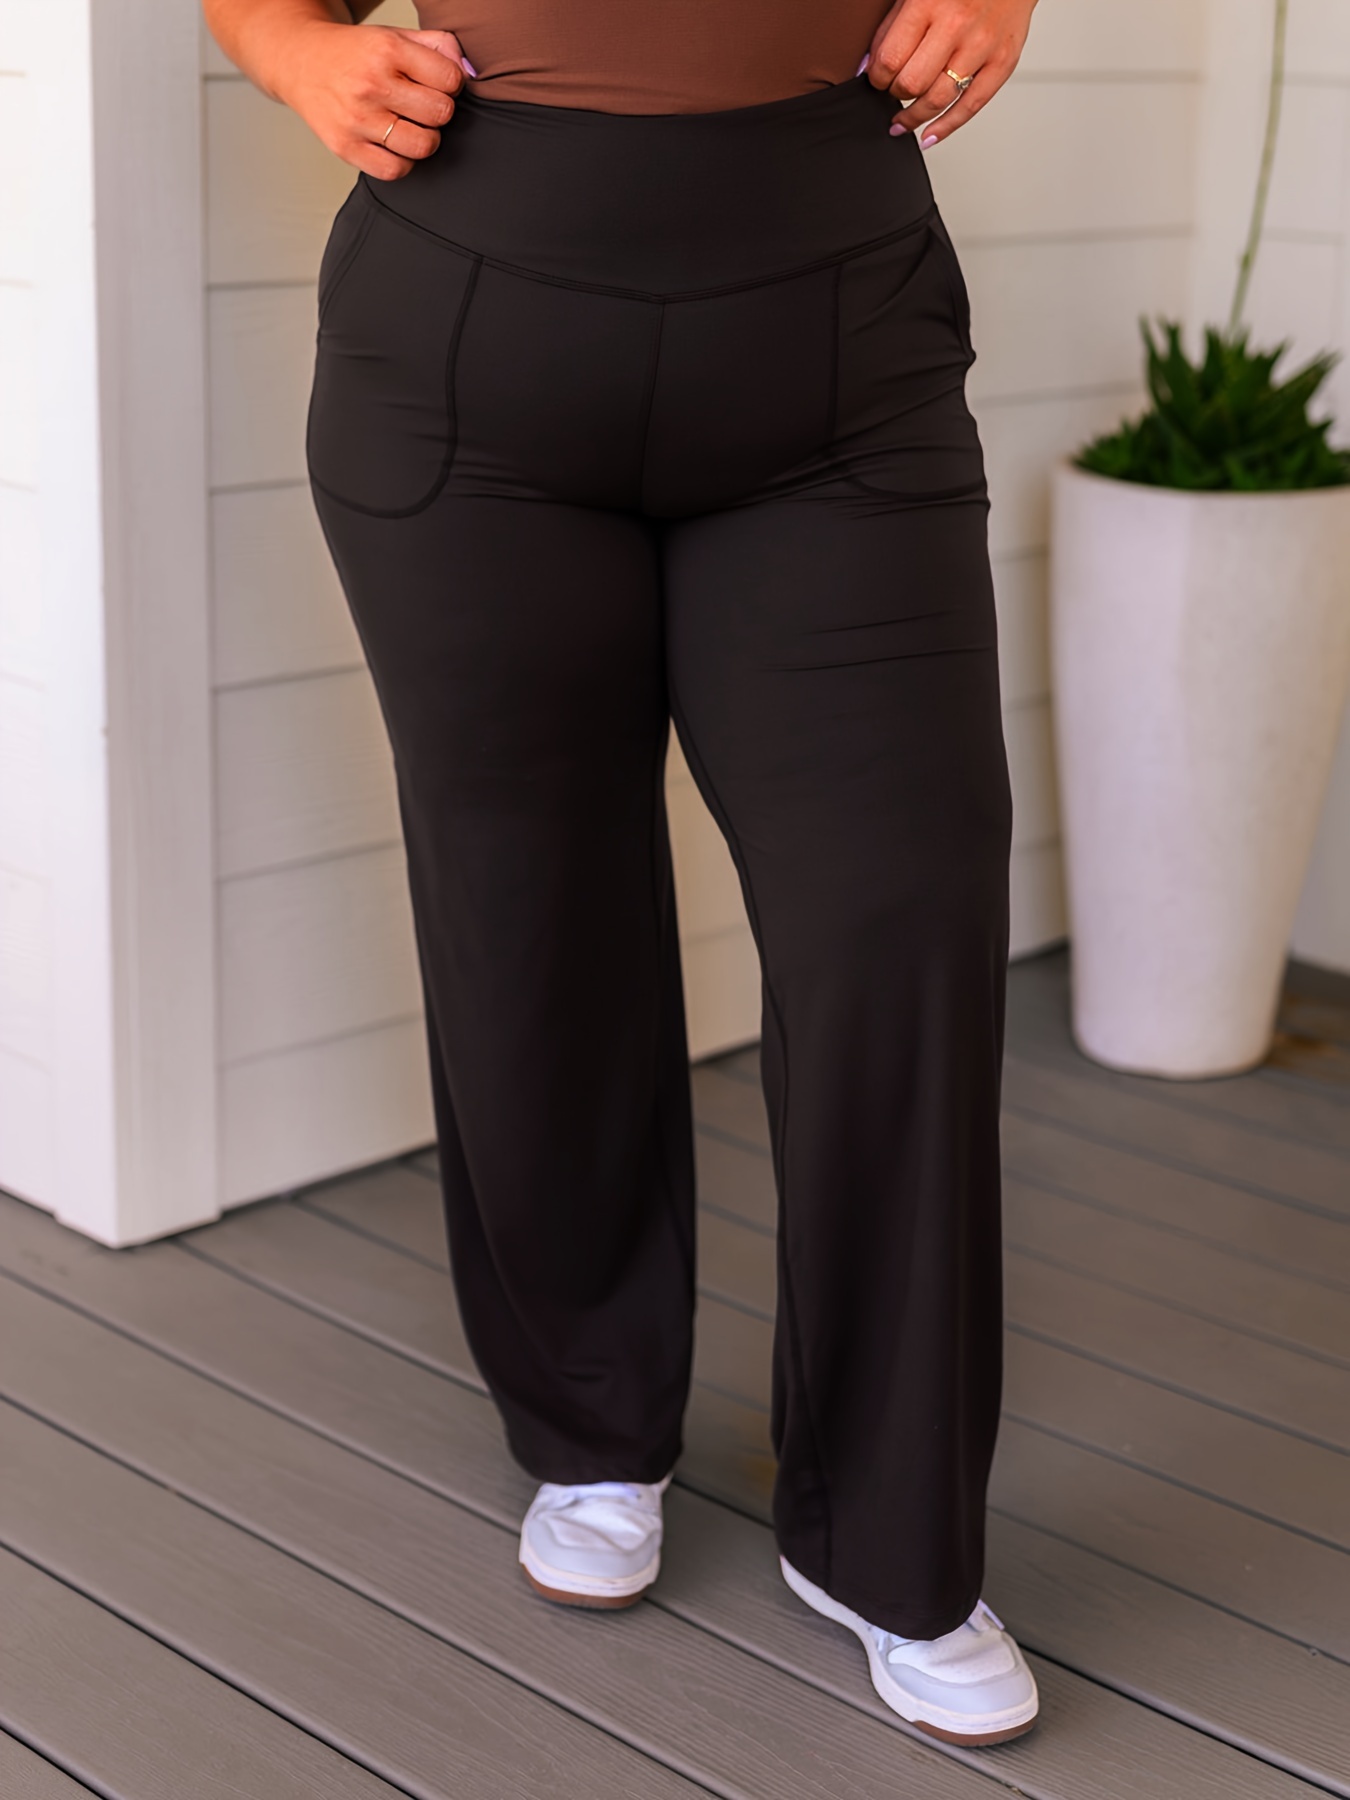 HSMQHJWE Pixie Pants Womens Plus Size Pants Casual Ladies Solid